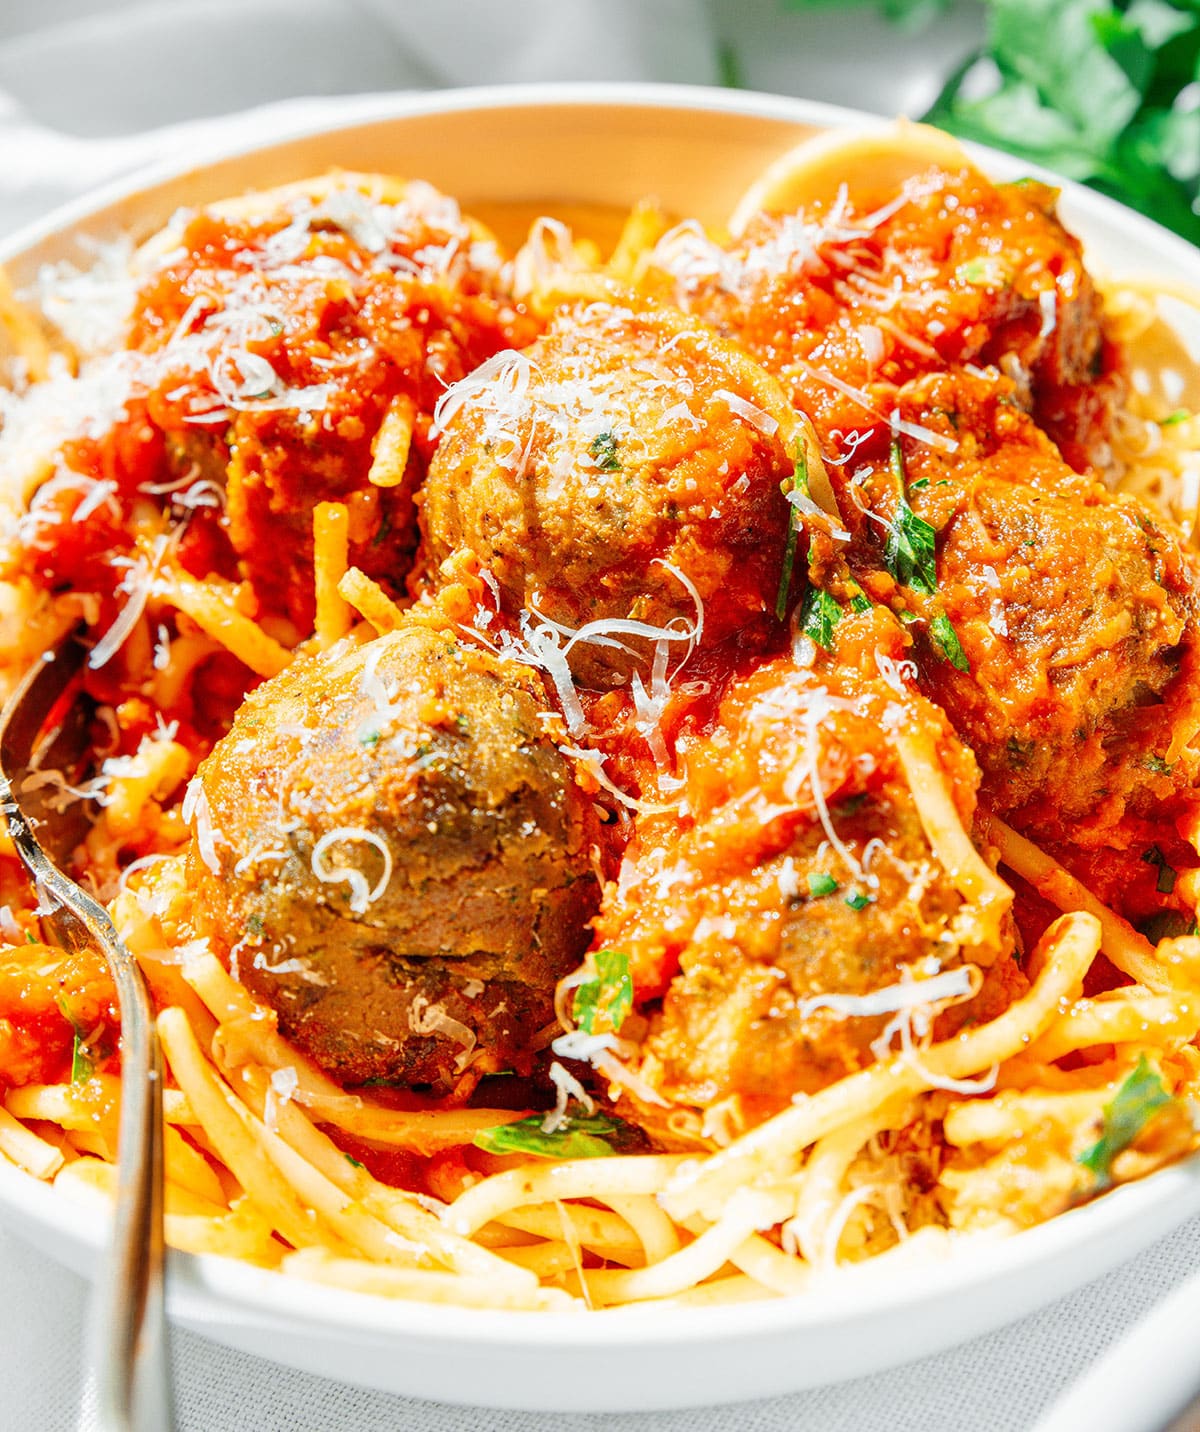 Chickpea meatballs with spaghetti and marinara sauce.